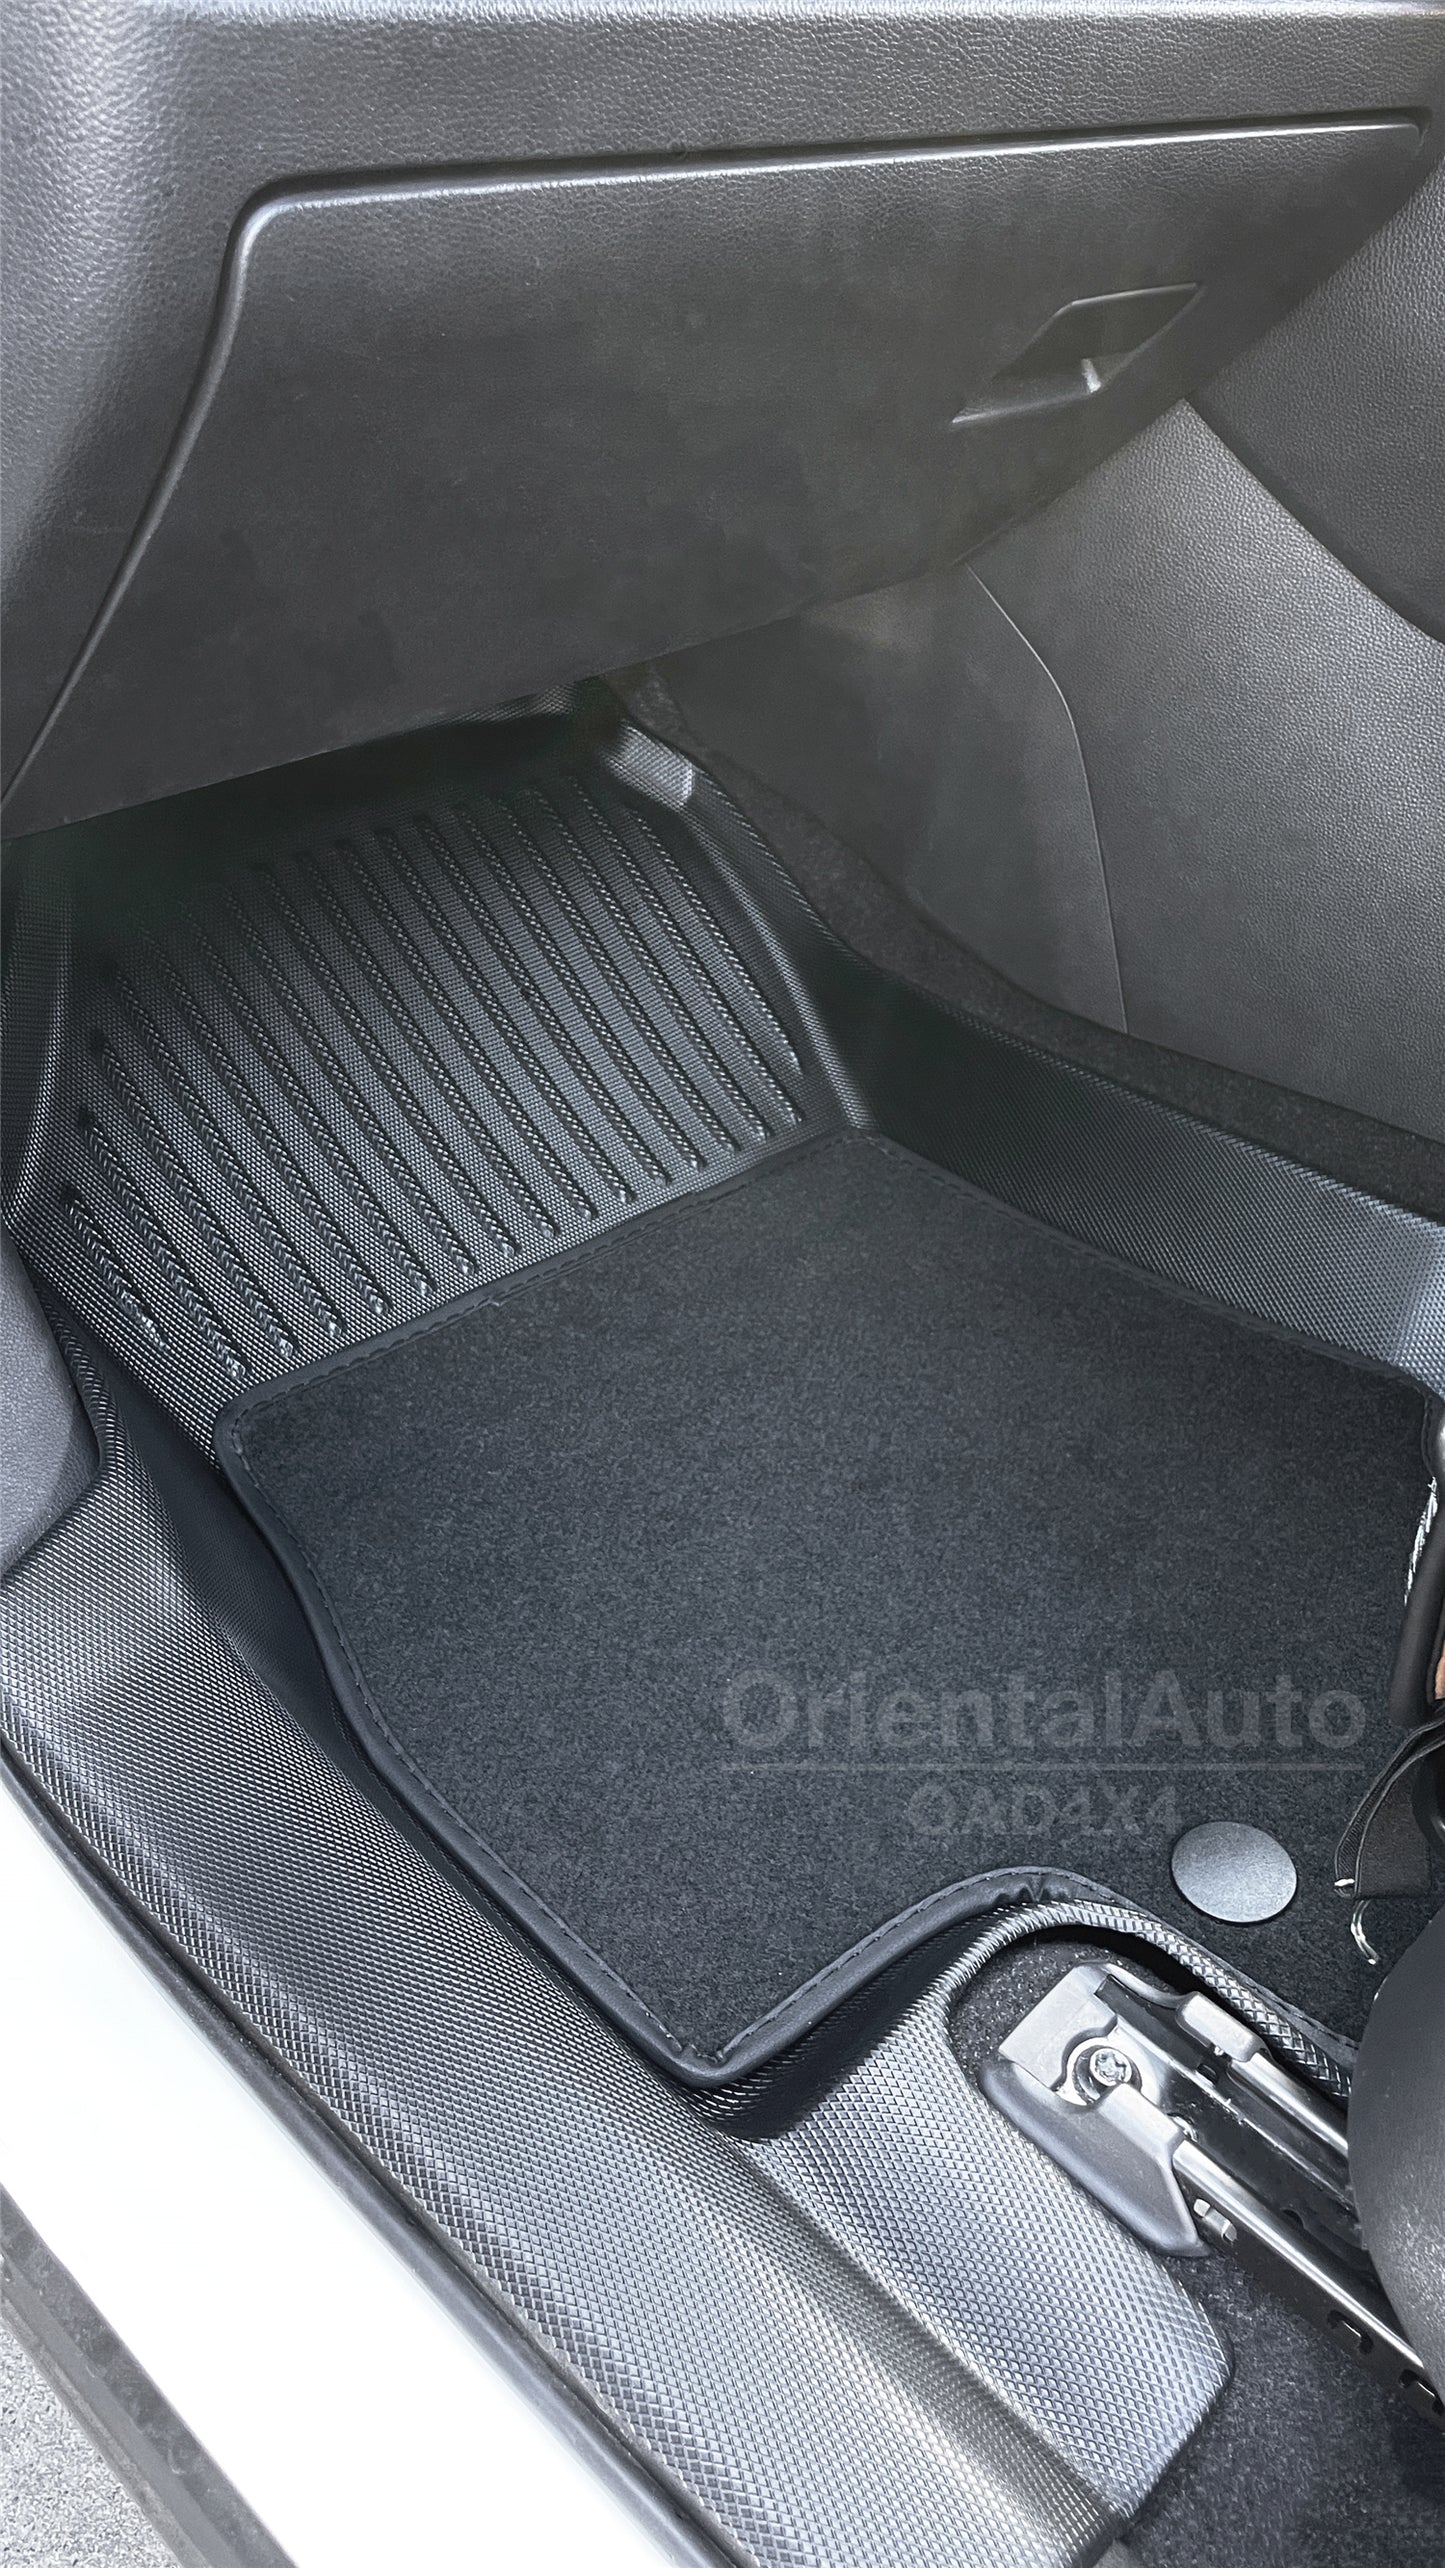 5D TPE Floor Mats for Toyota RAV4 2019-Onwards Tailored Door Sill Covered Car Floor Mat Liner with Detachable Carpet